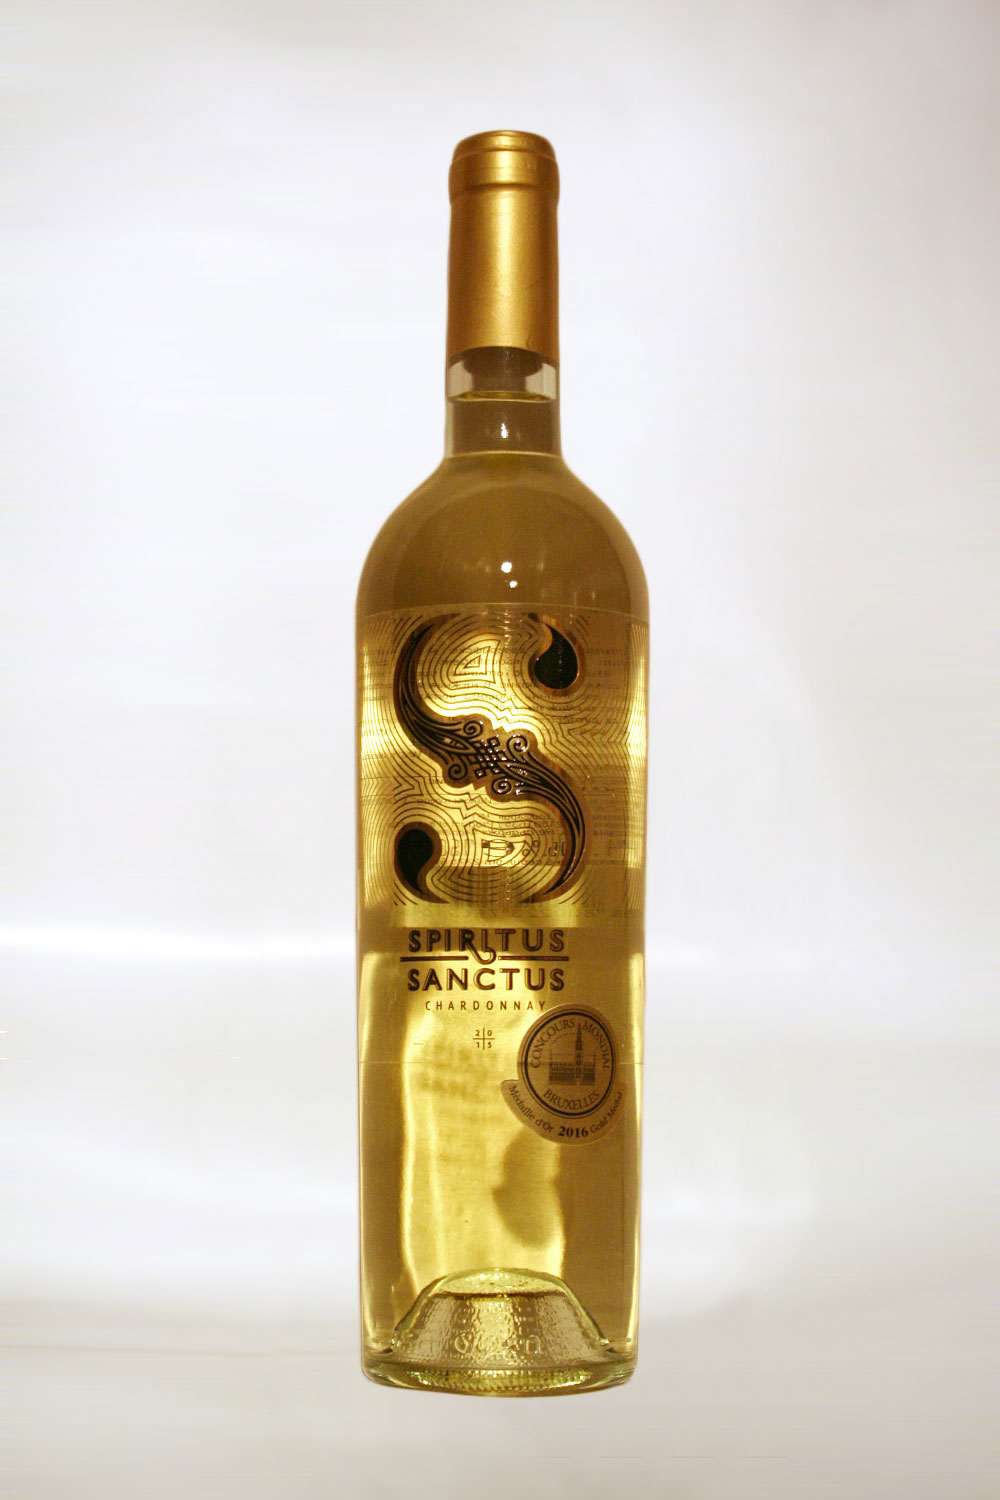 Spiritus Sanctus Chardonnay 2015